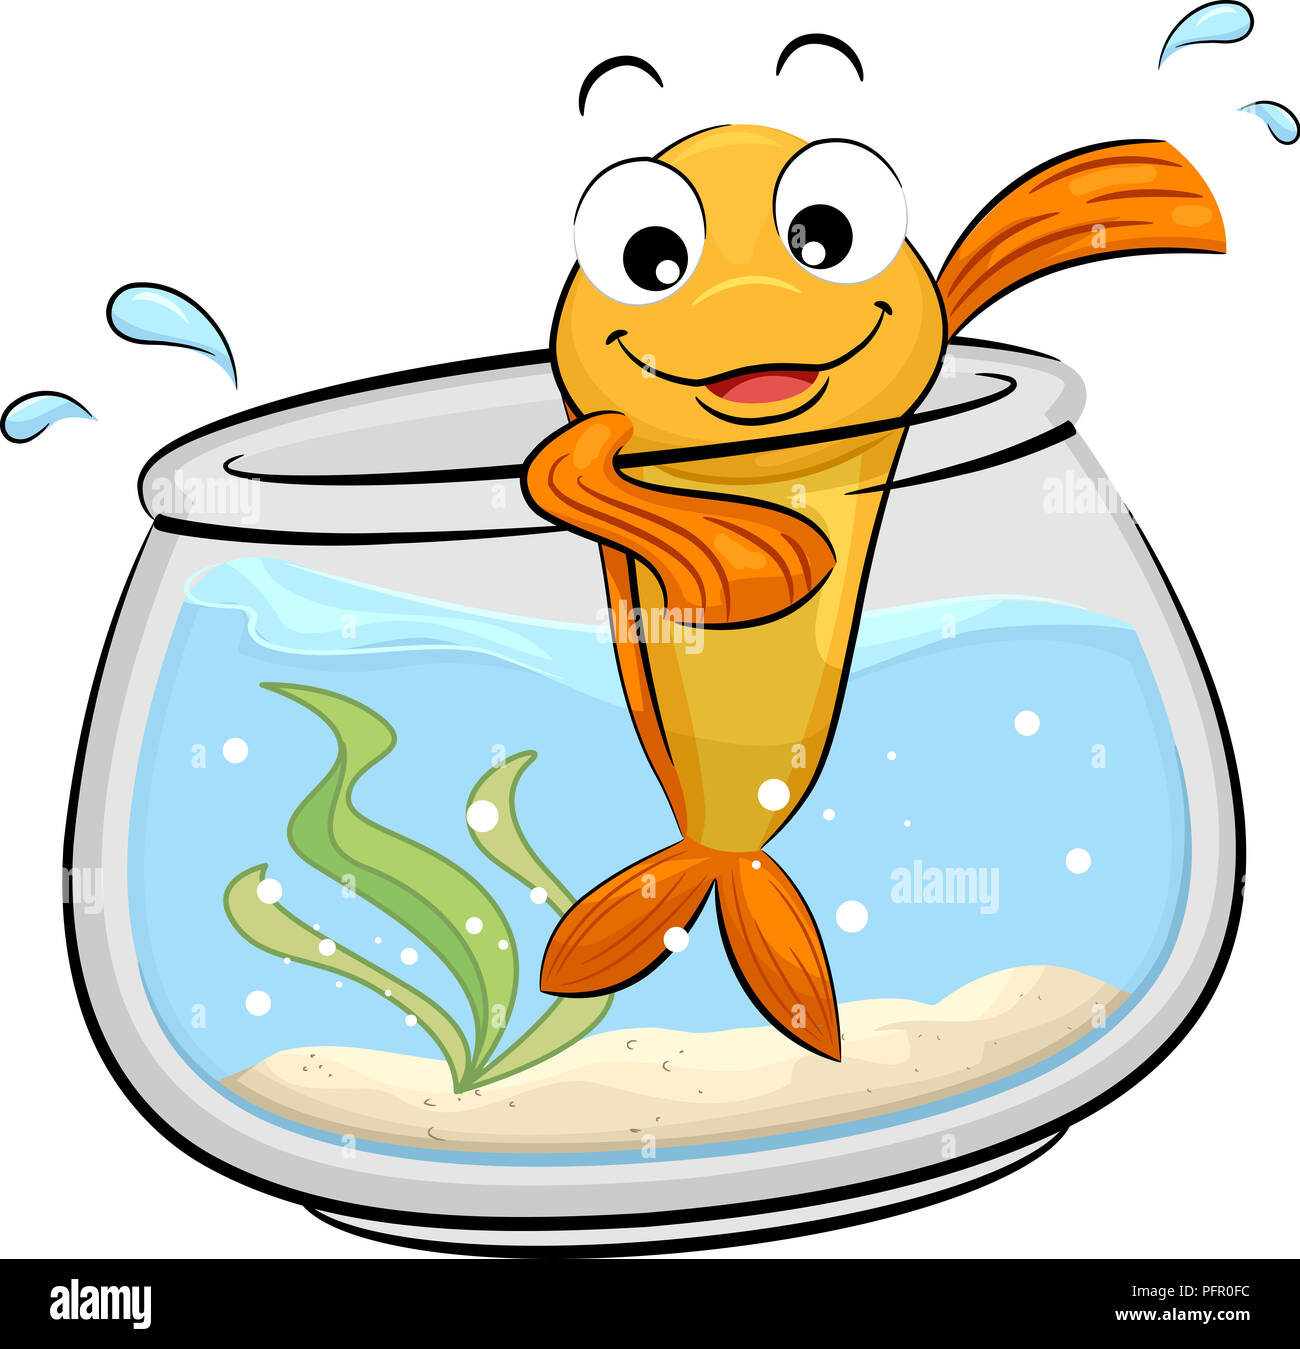 Illustration of a Gold Fish Mascot Waving From Its Fish Bowl Stock Photo -  Alamy